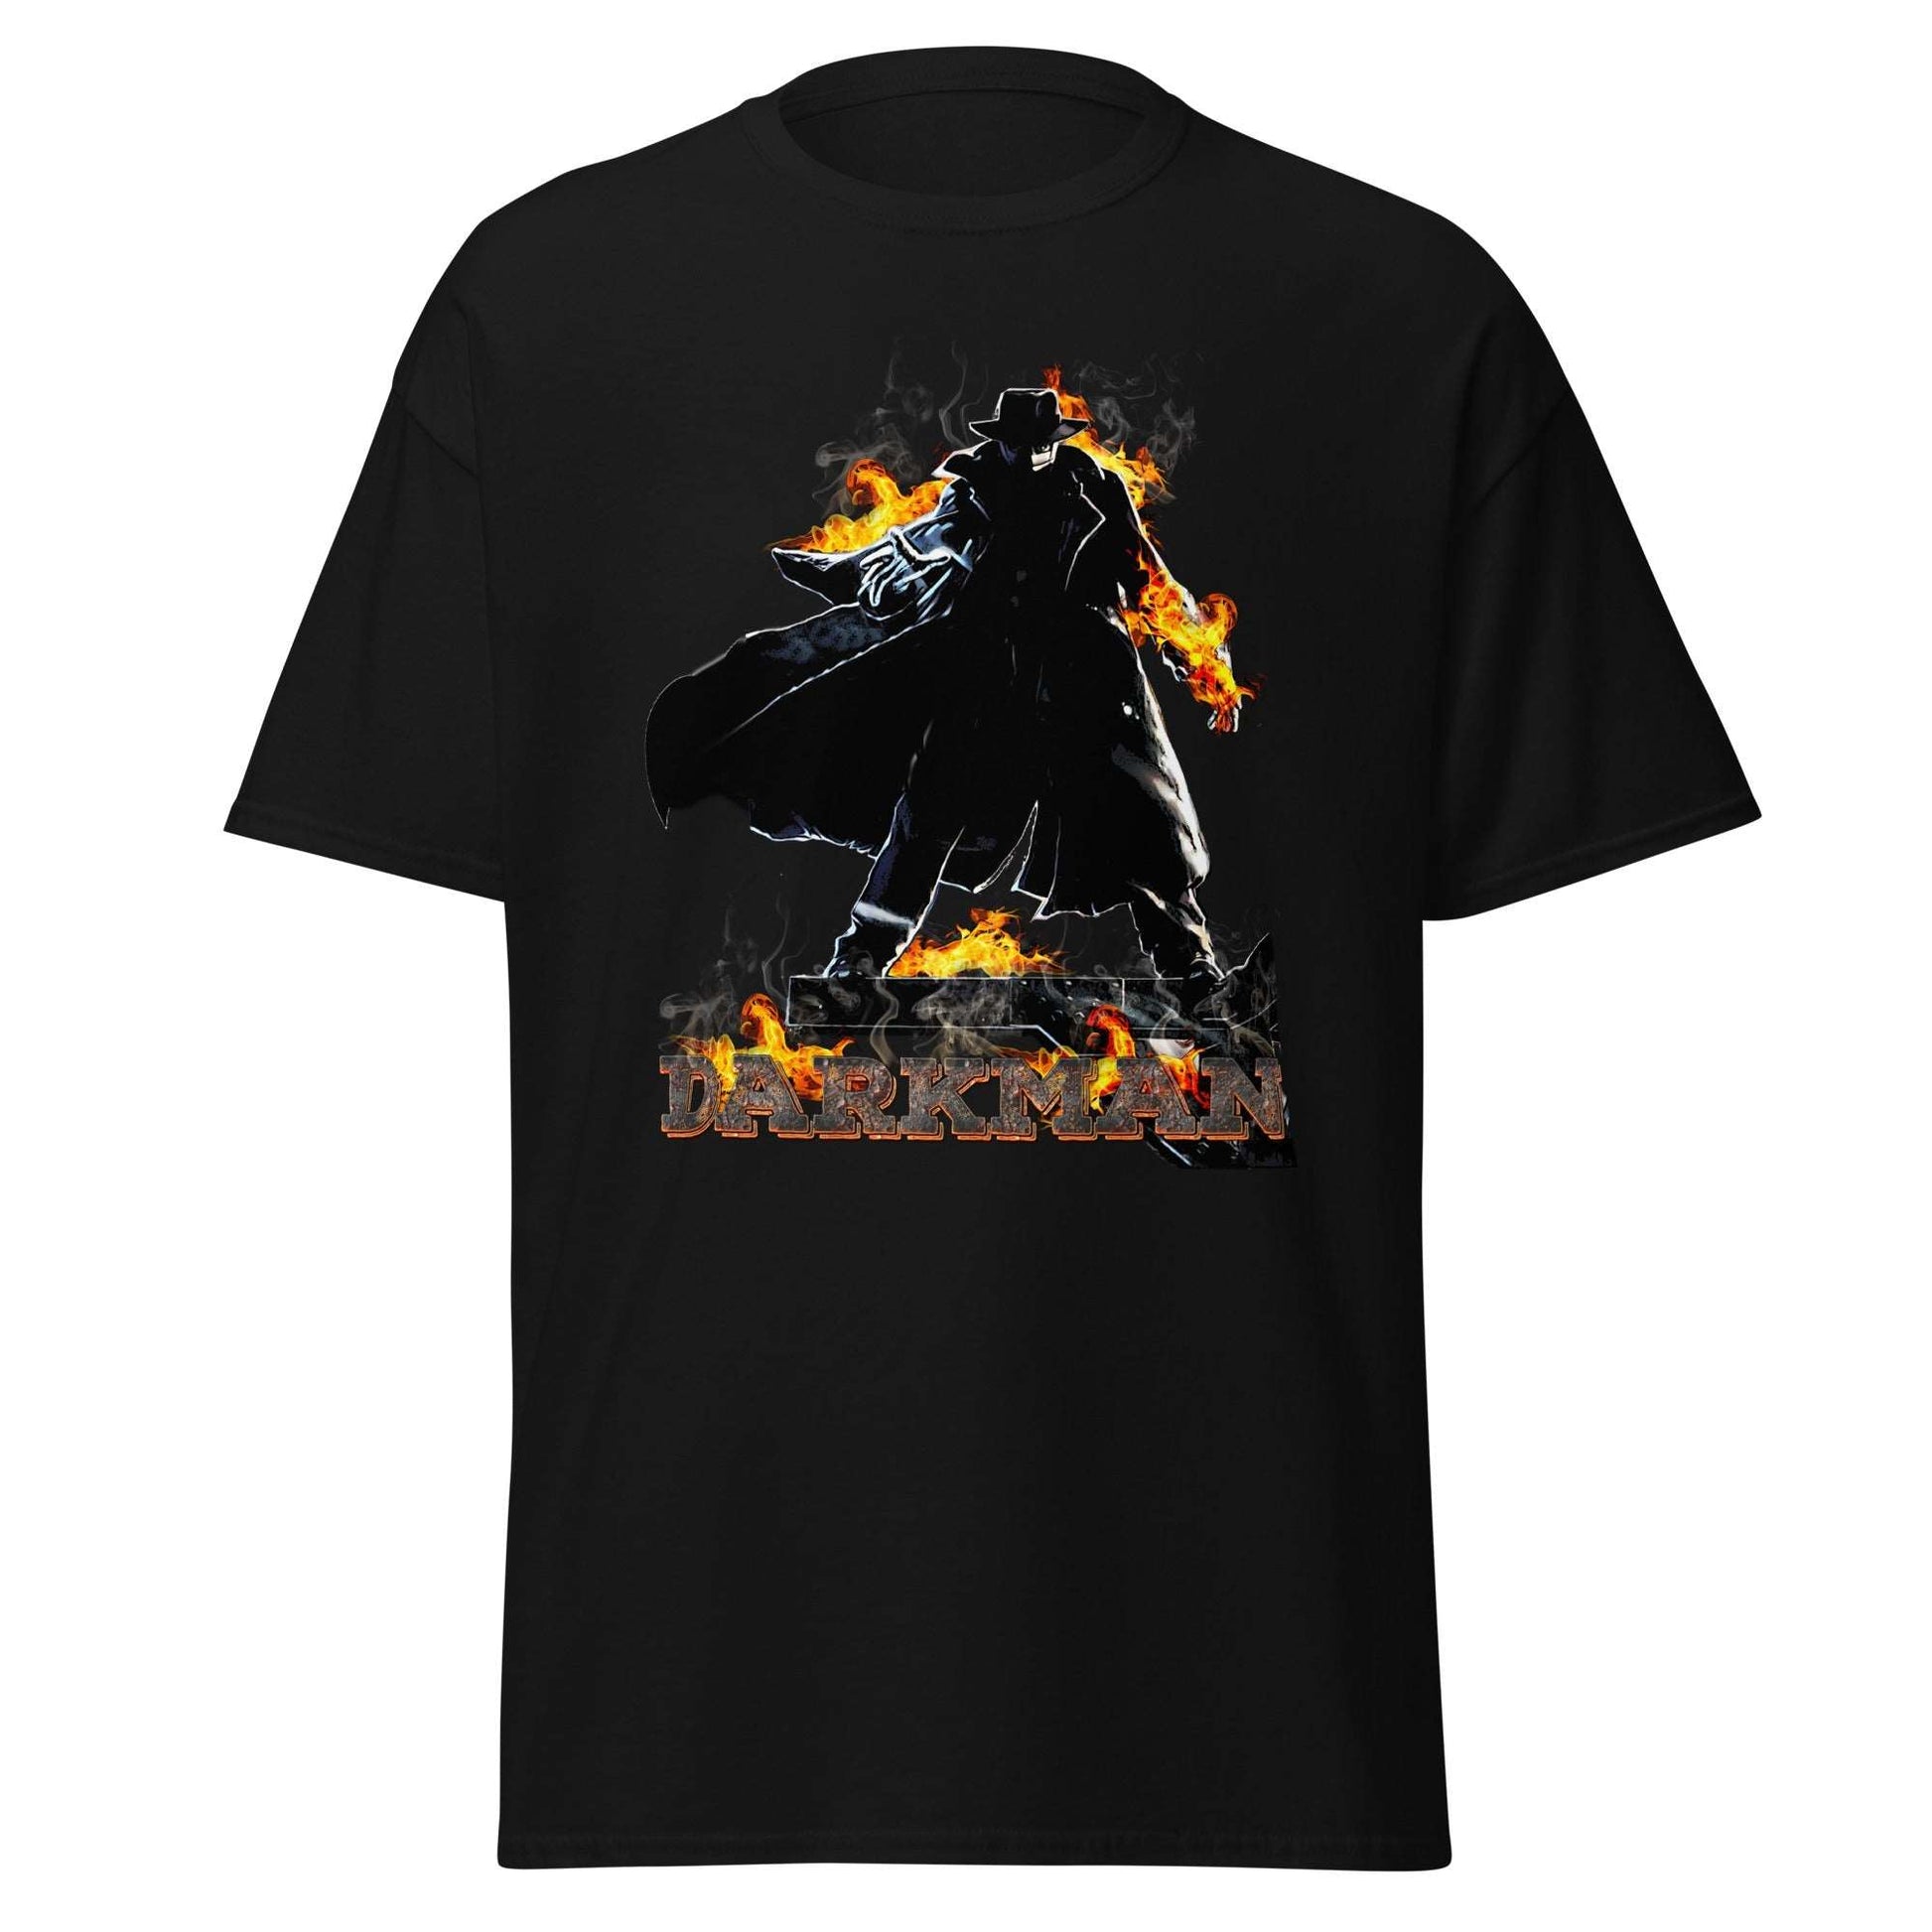 Darkman T-Shirt - Embrace the Hero of Darkness - thenightmareinc